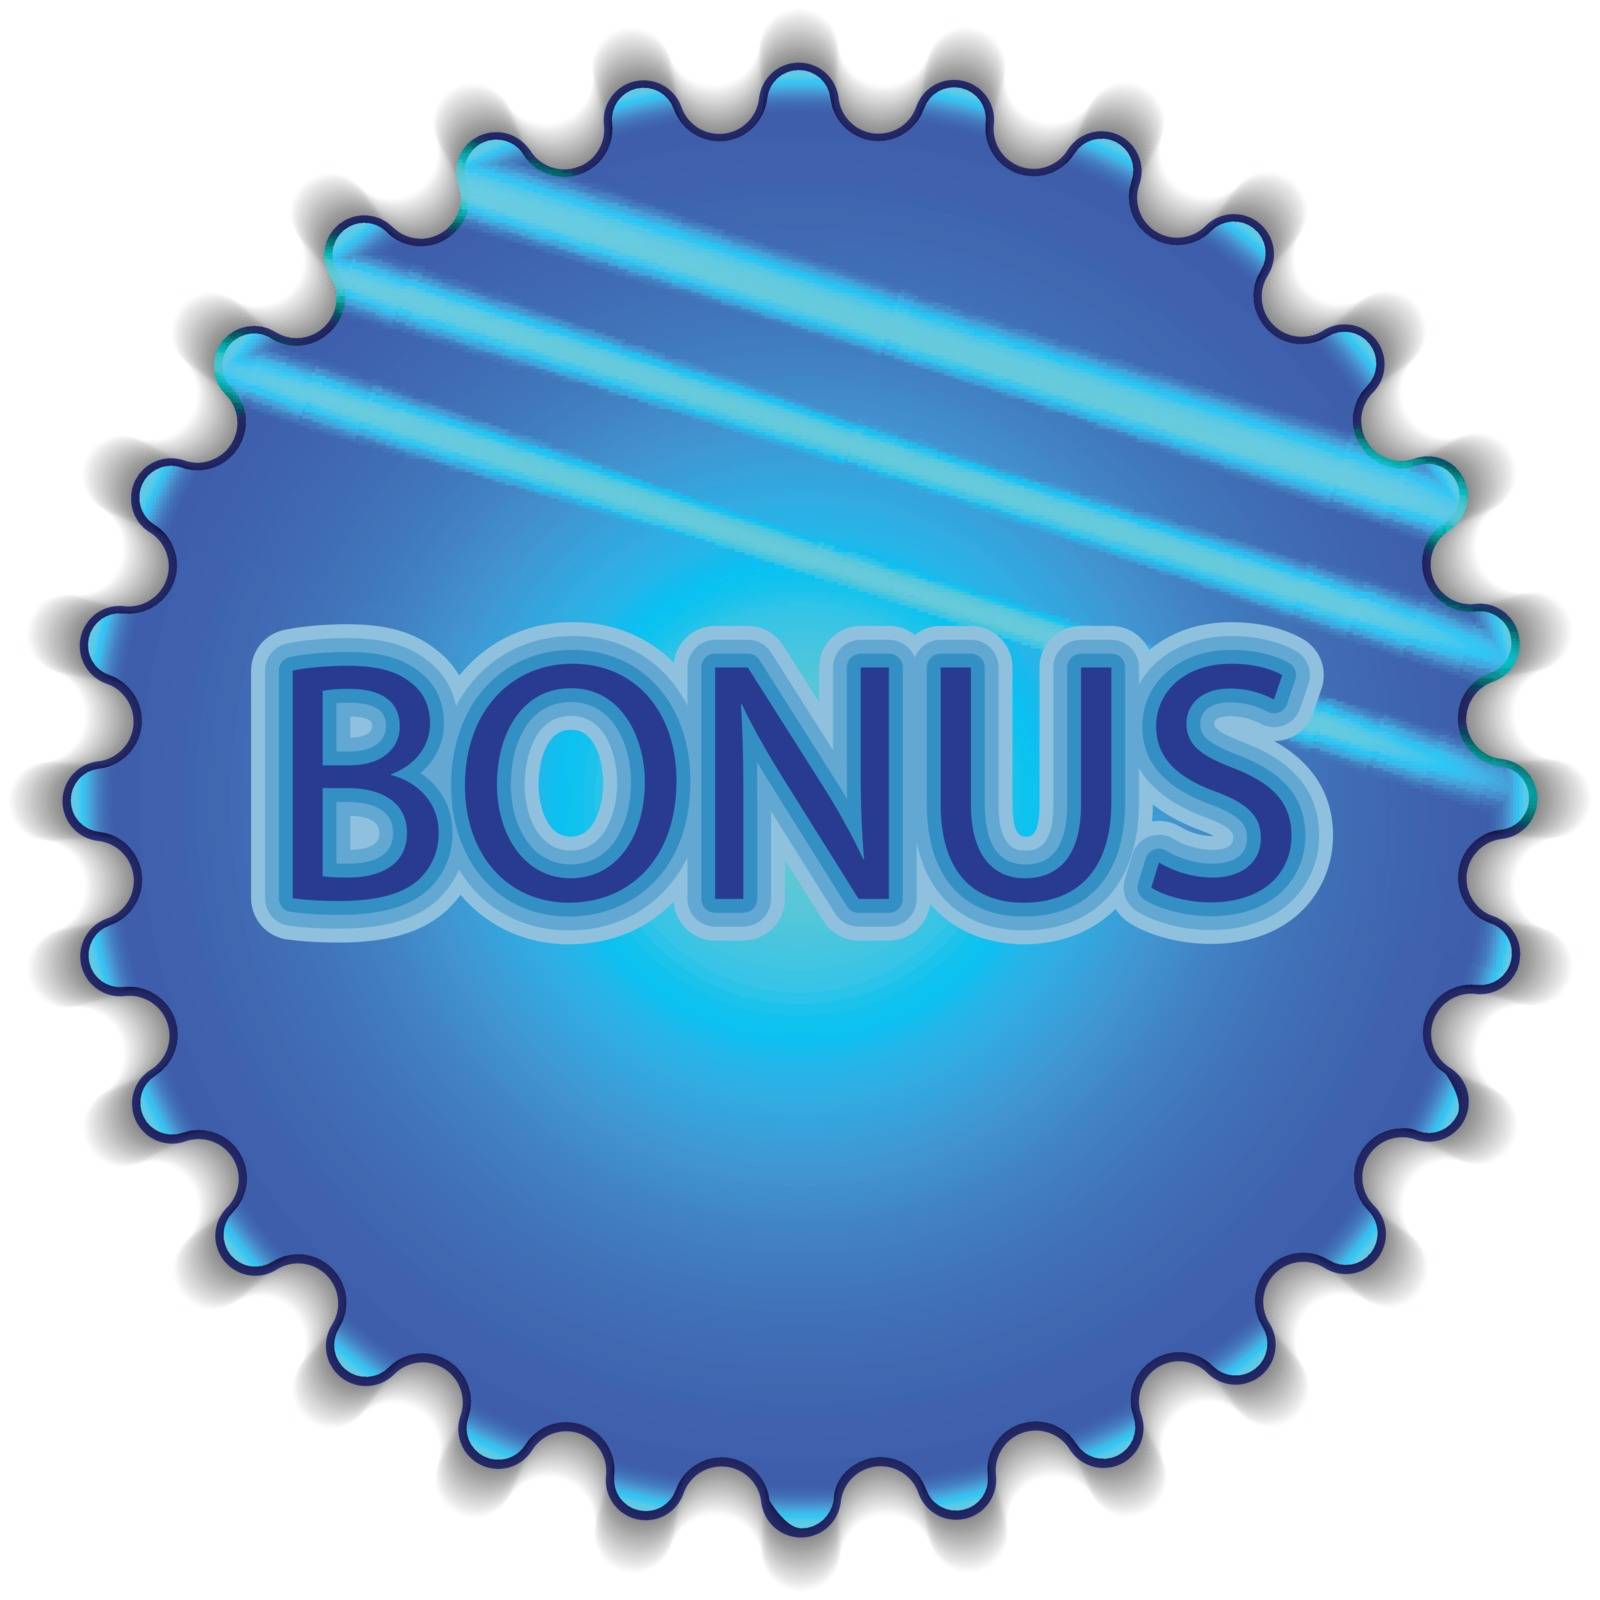 Big blue button labeled "Bonus" by serhii_lohvyniuk